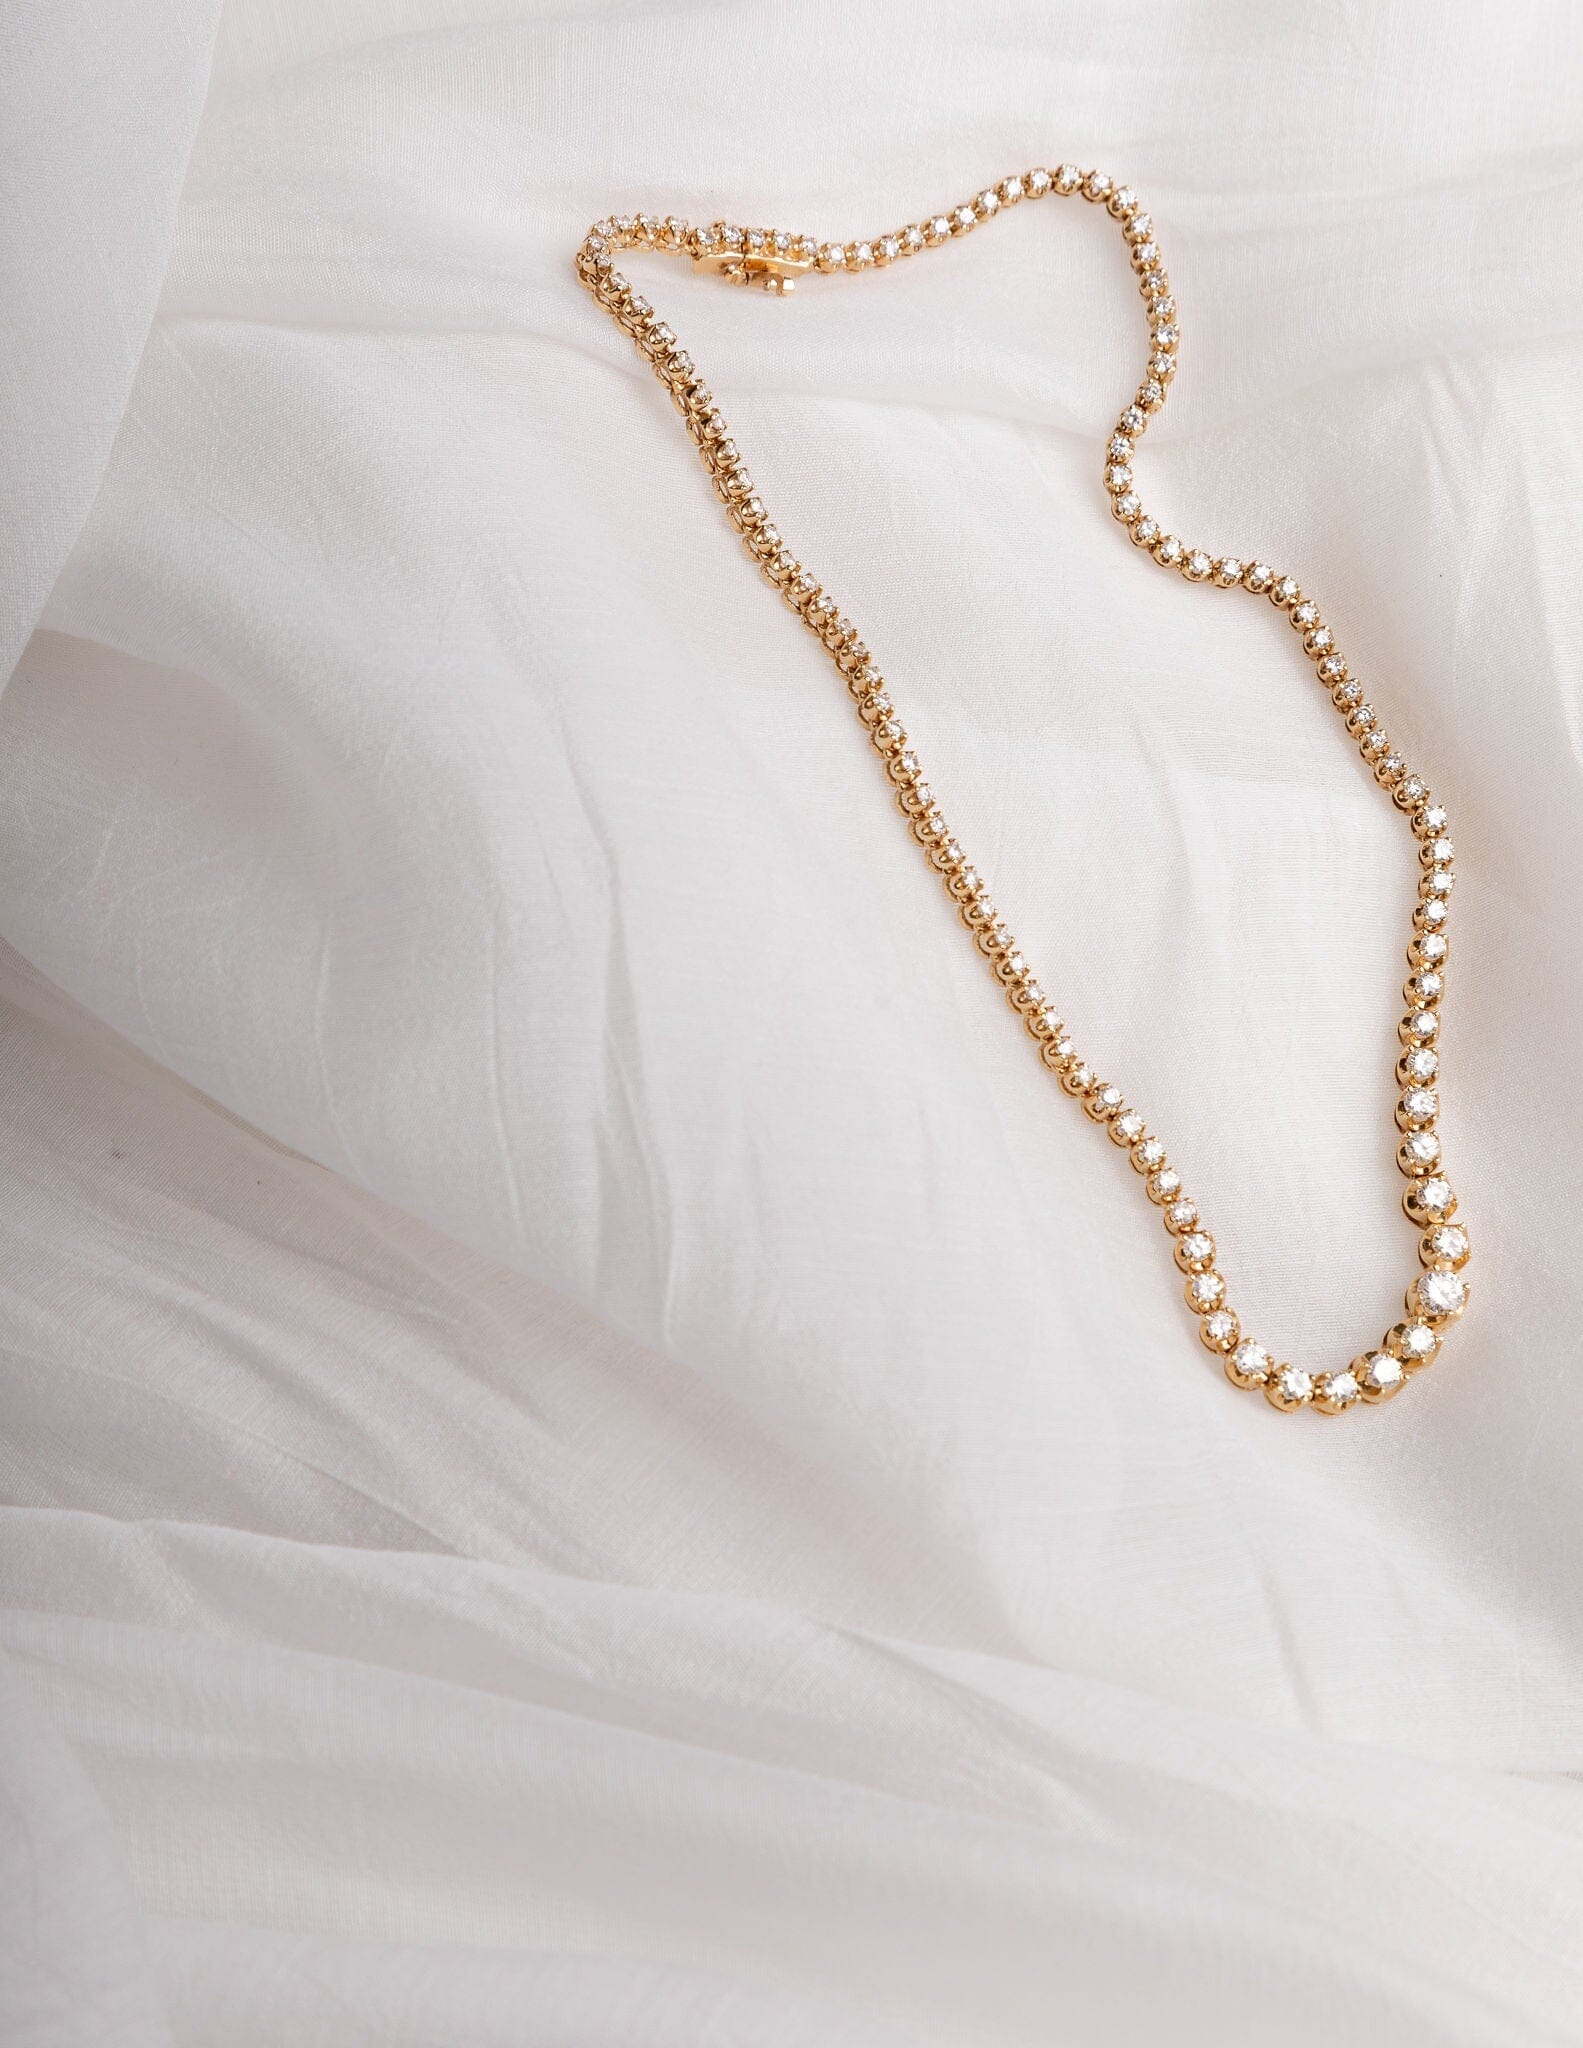 Gatsby Rose Cut Antique Tennis Necklace  - BONDEYE JEWELRY ®